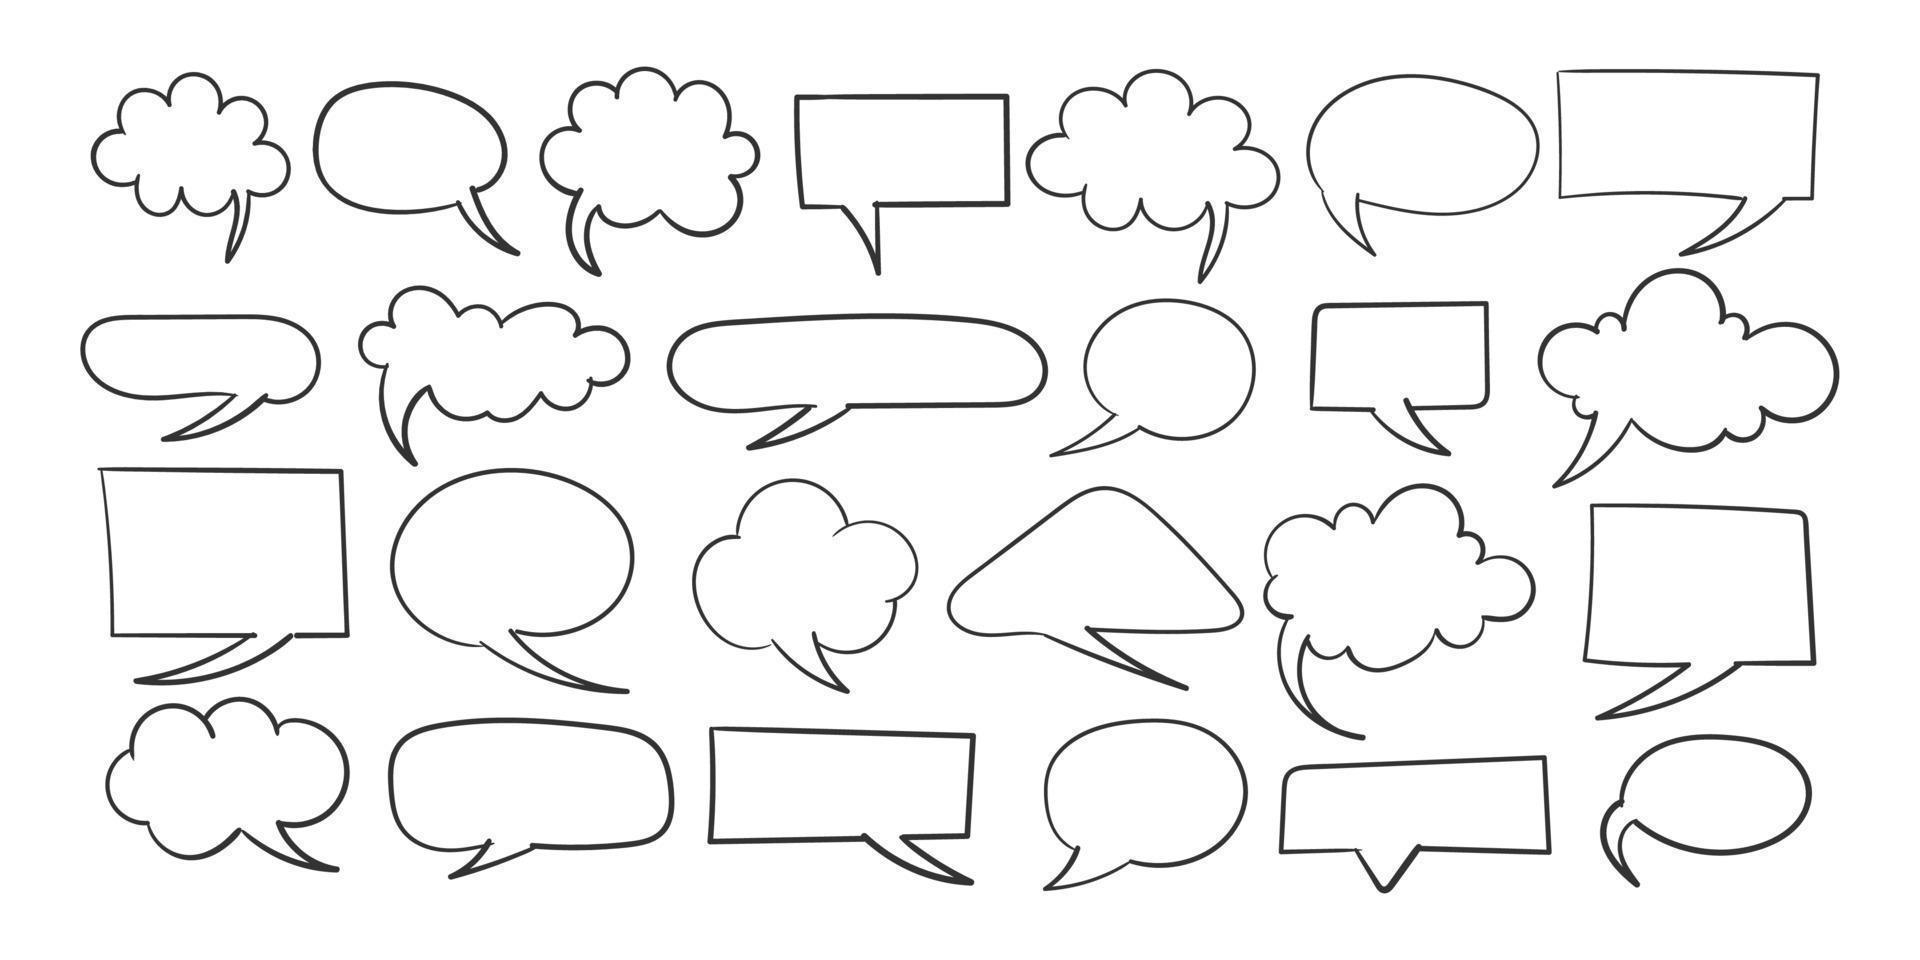 Speech bubble signs. Hand drawn Icons. Collection of empty speech bubbles. Comic speech bubble. Retro empty comic bubble. Vector illustration